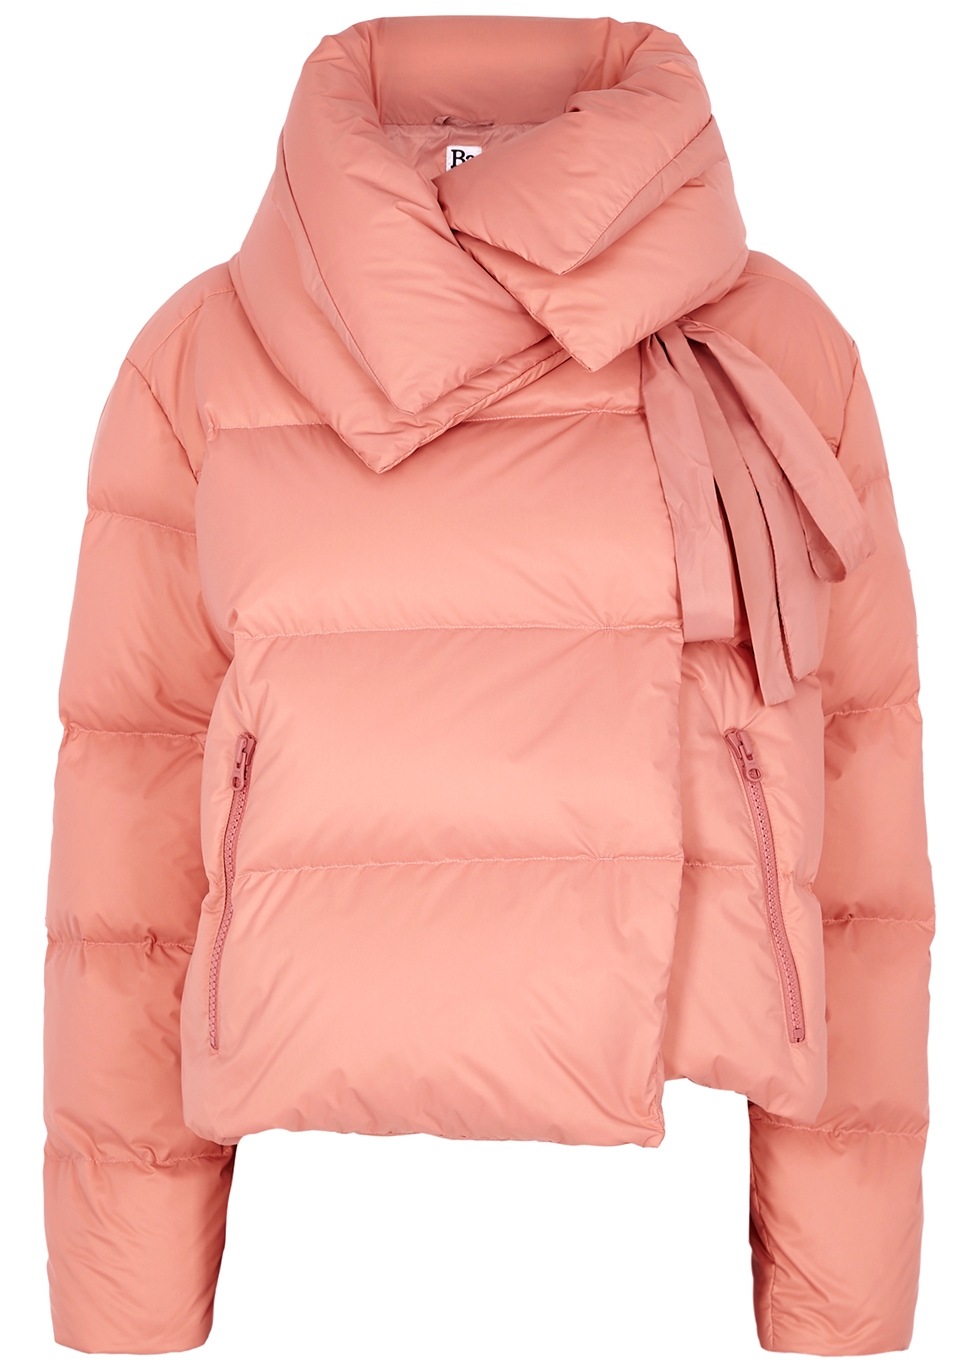 Puffa Ruff Superwalt pink quilted shell jacket